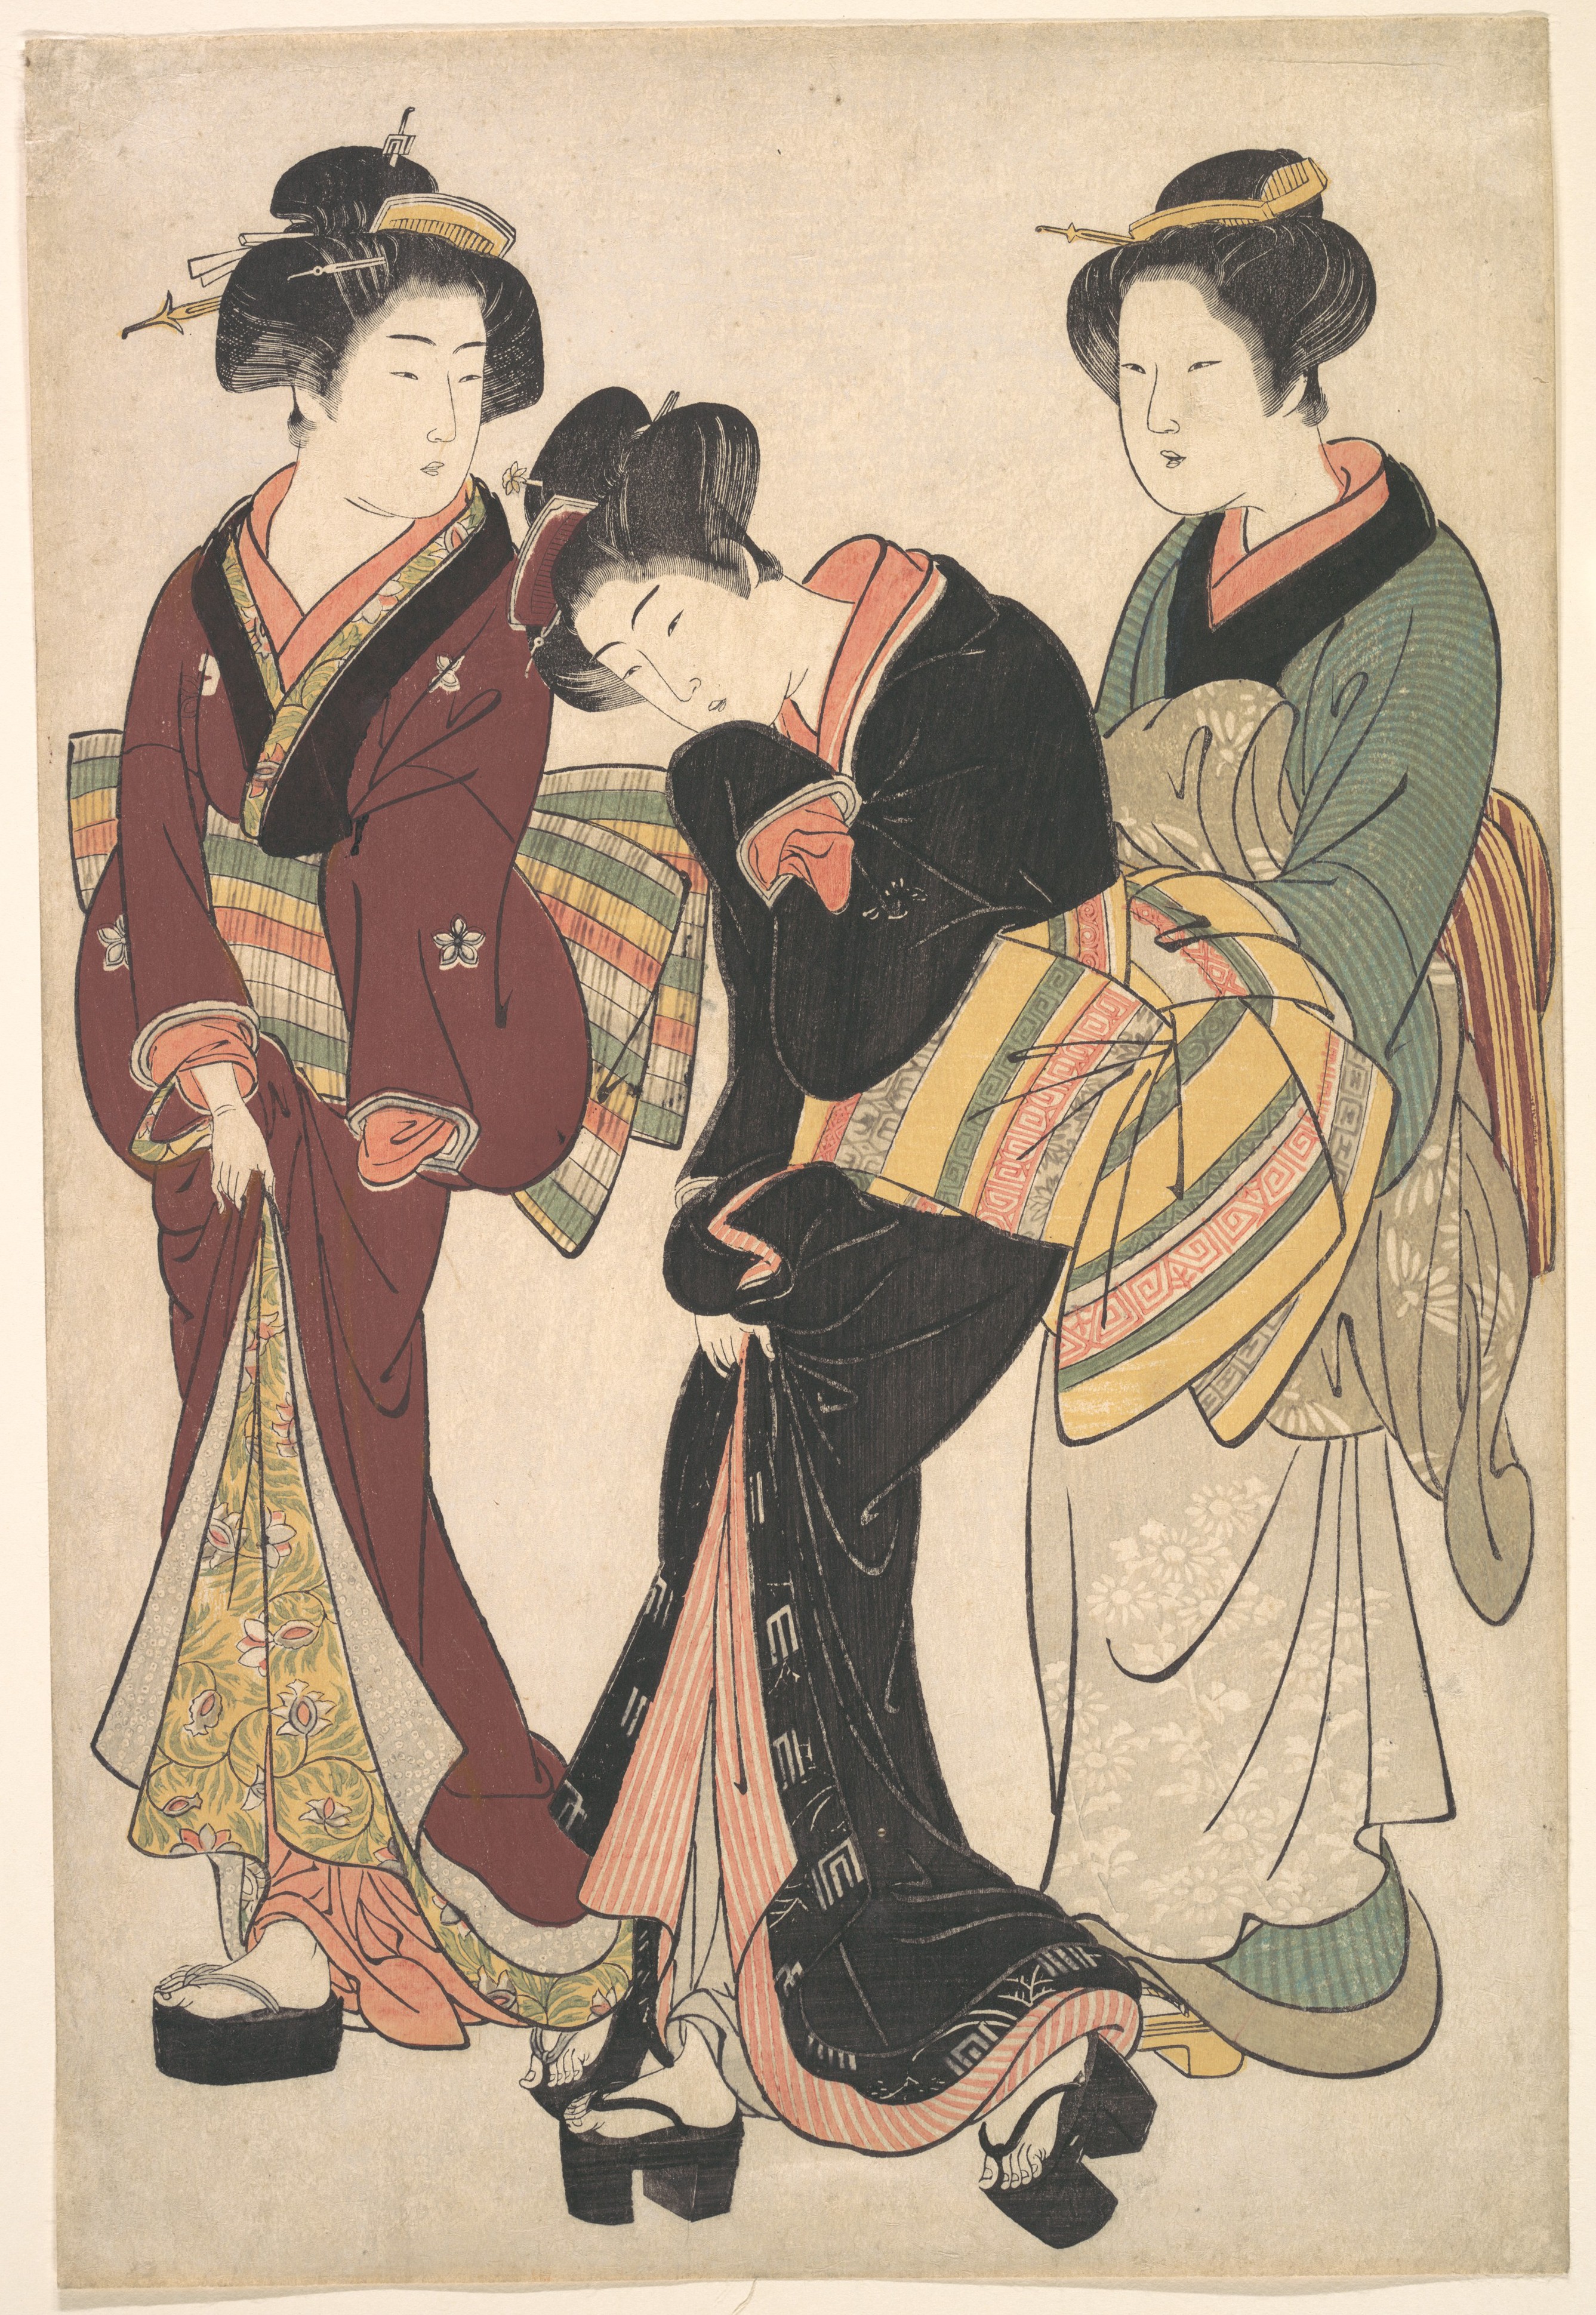 Kitao Shigemasa Two Geishas And A Maid Japan Edo Period 1615 1868 The Metropolitan